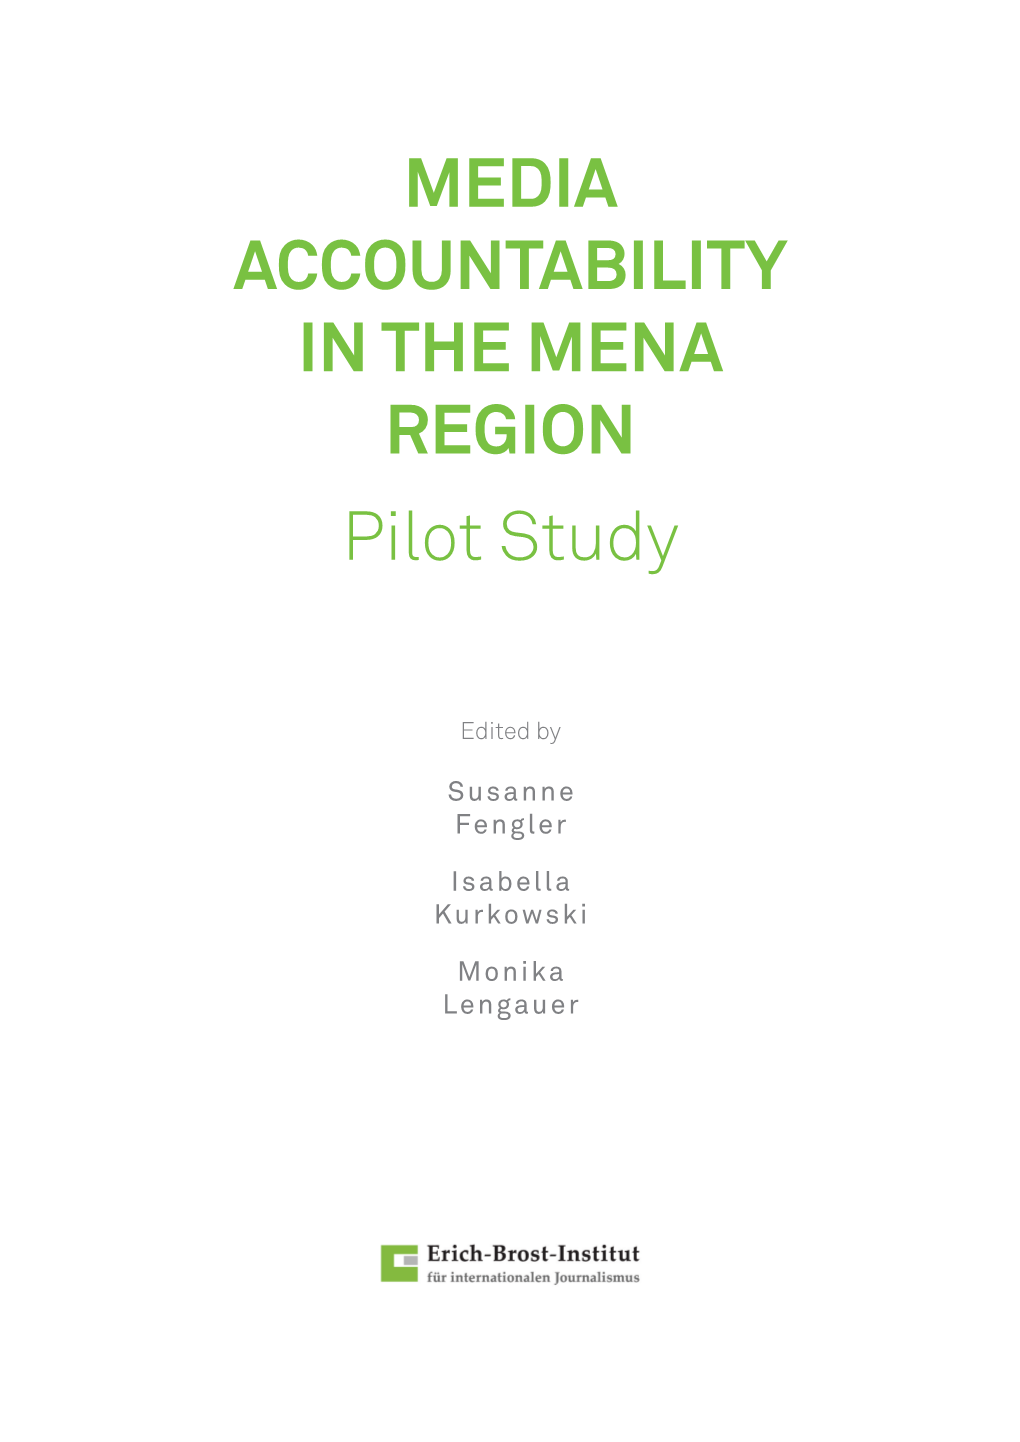 MEDIA ACCOUNTABILITY in the MENA REGION Pilot Study